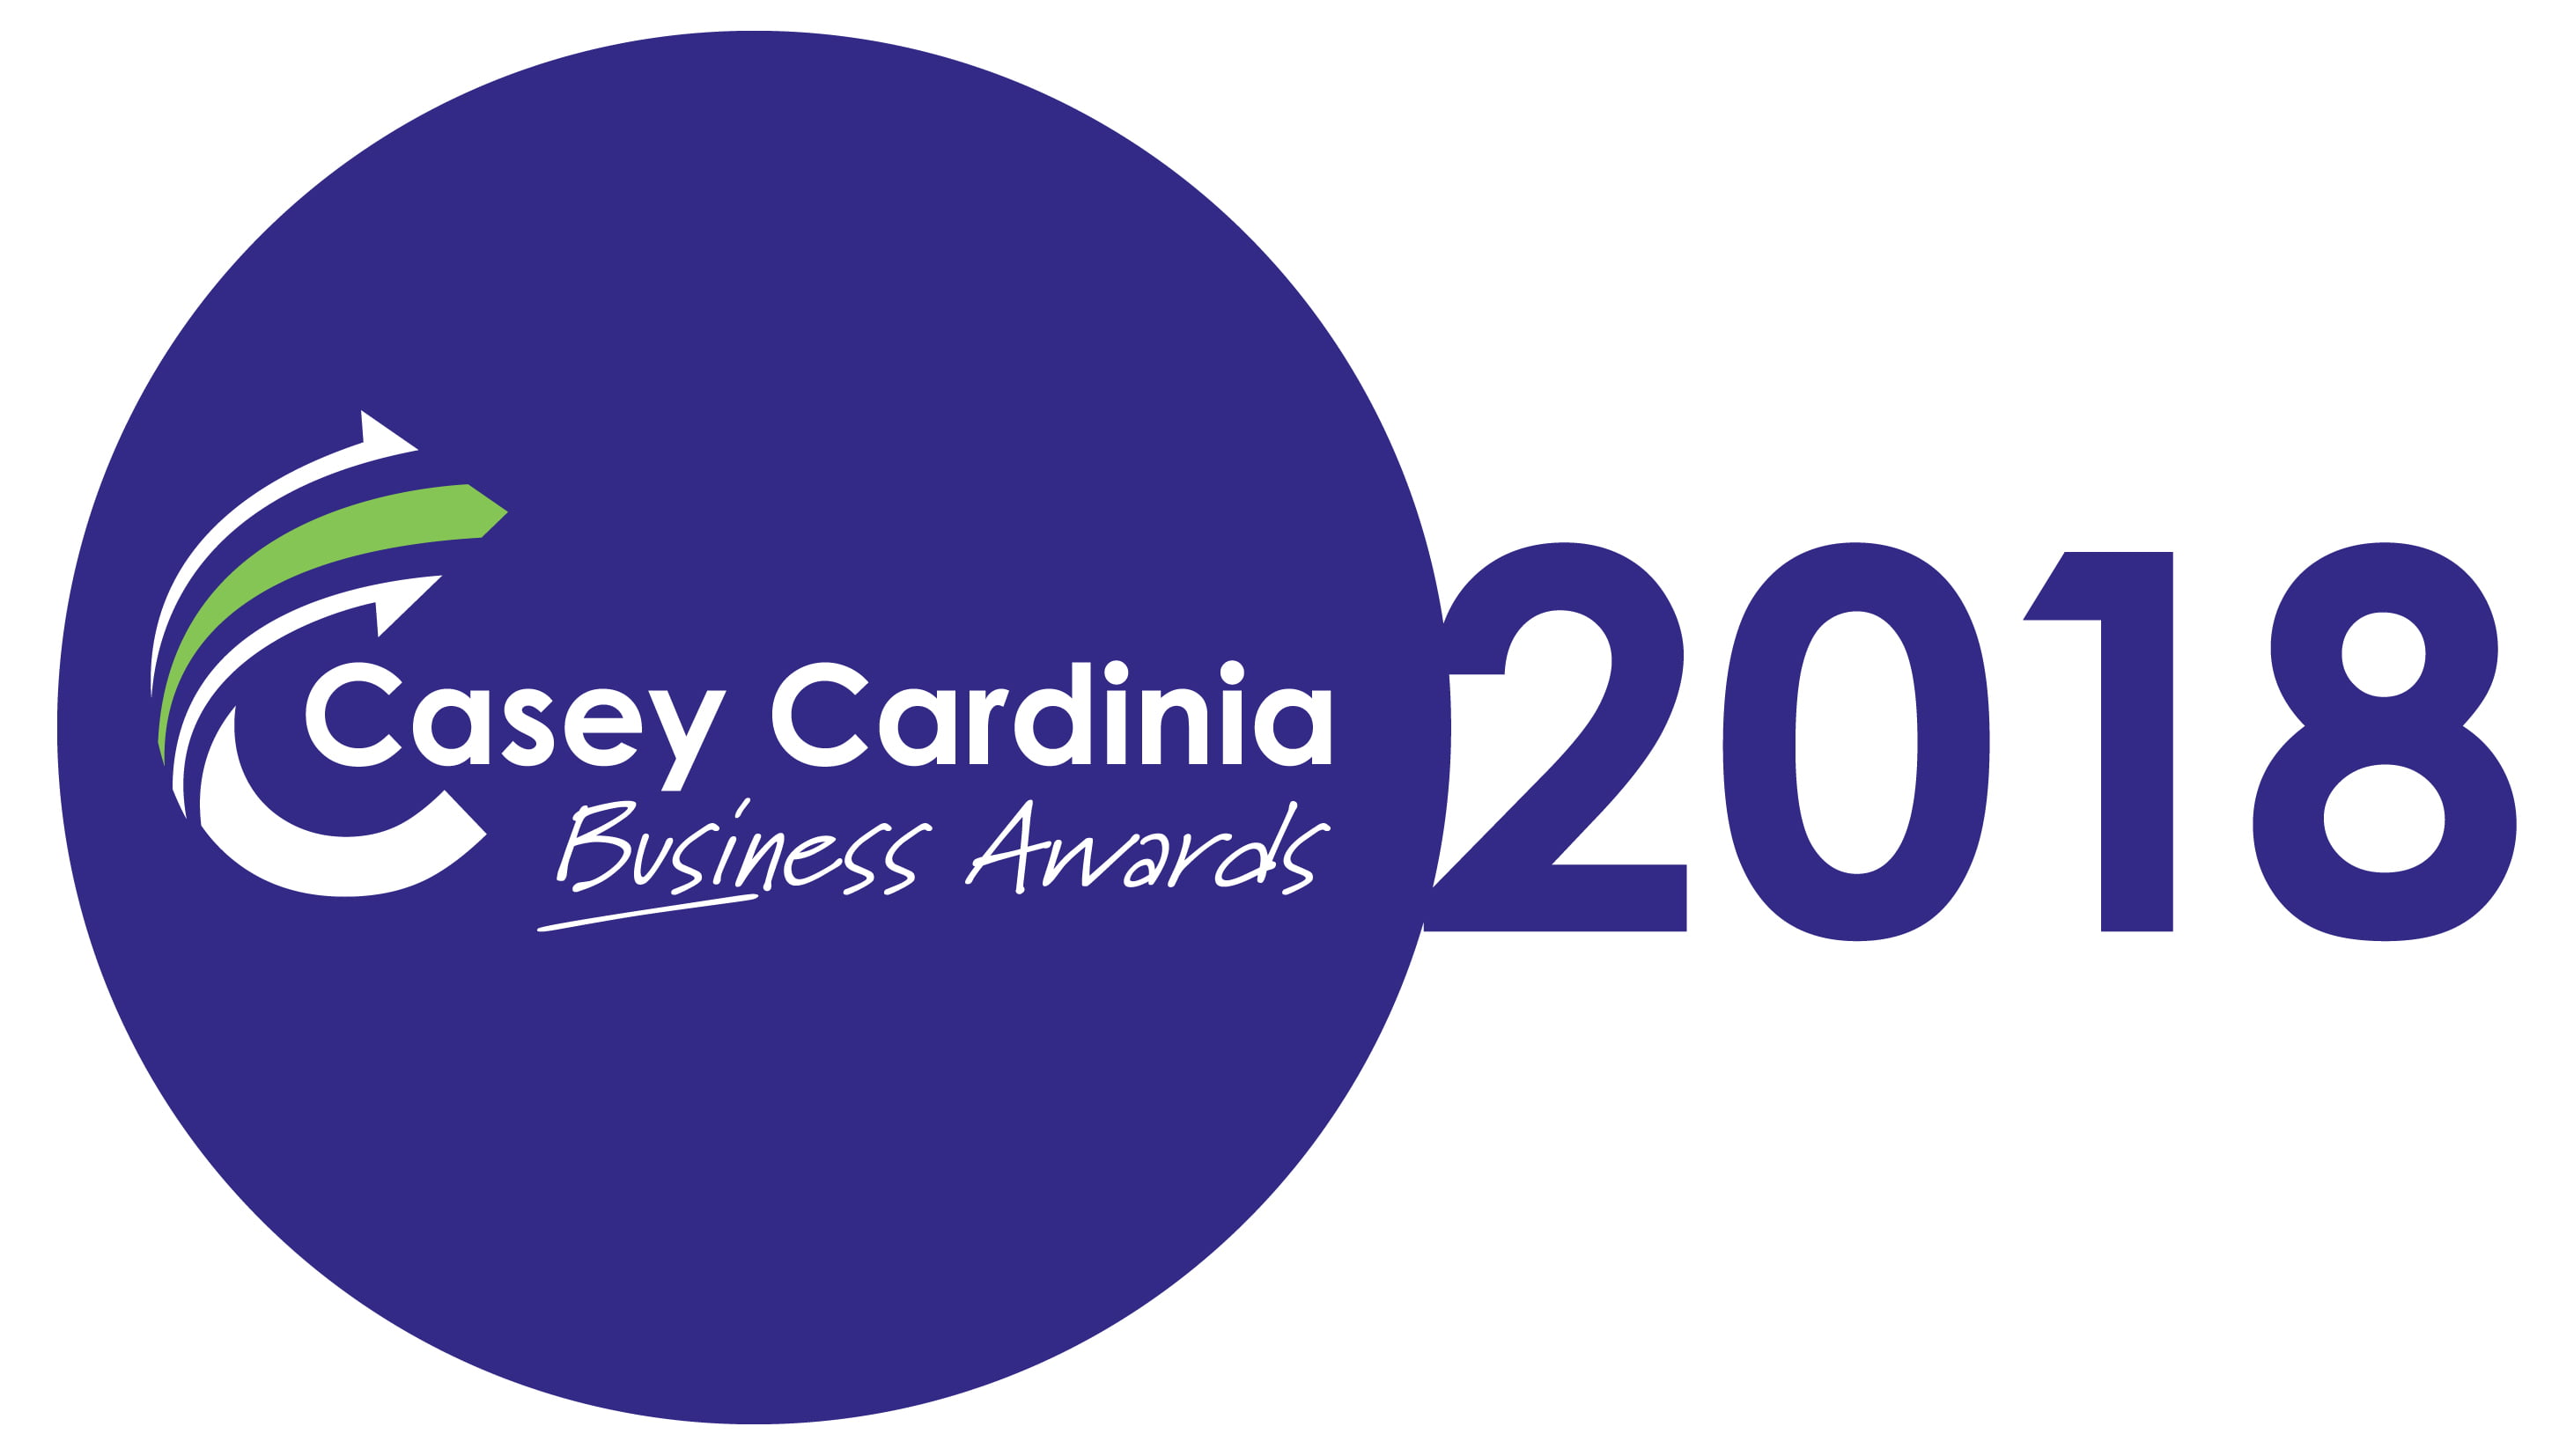 Casey Cardinia Business Awards 2018